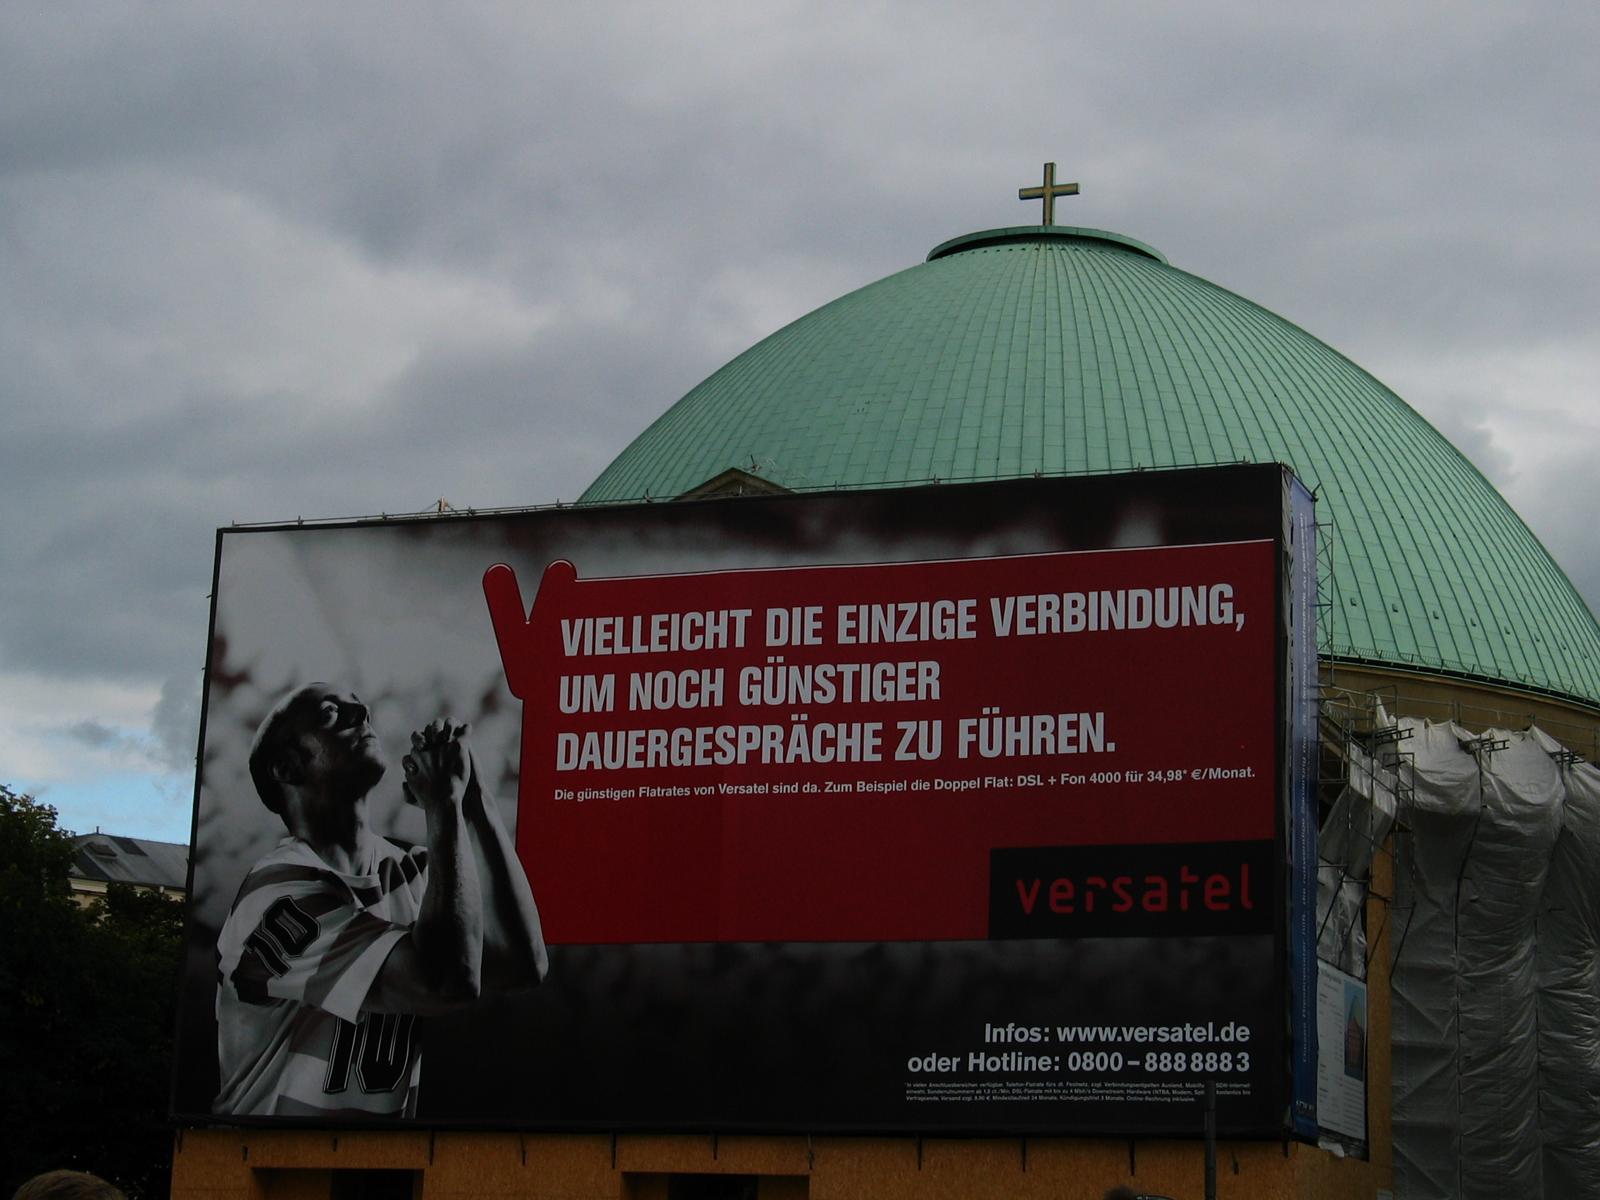 A church hidden by an ad